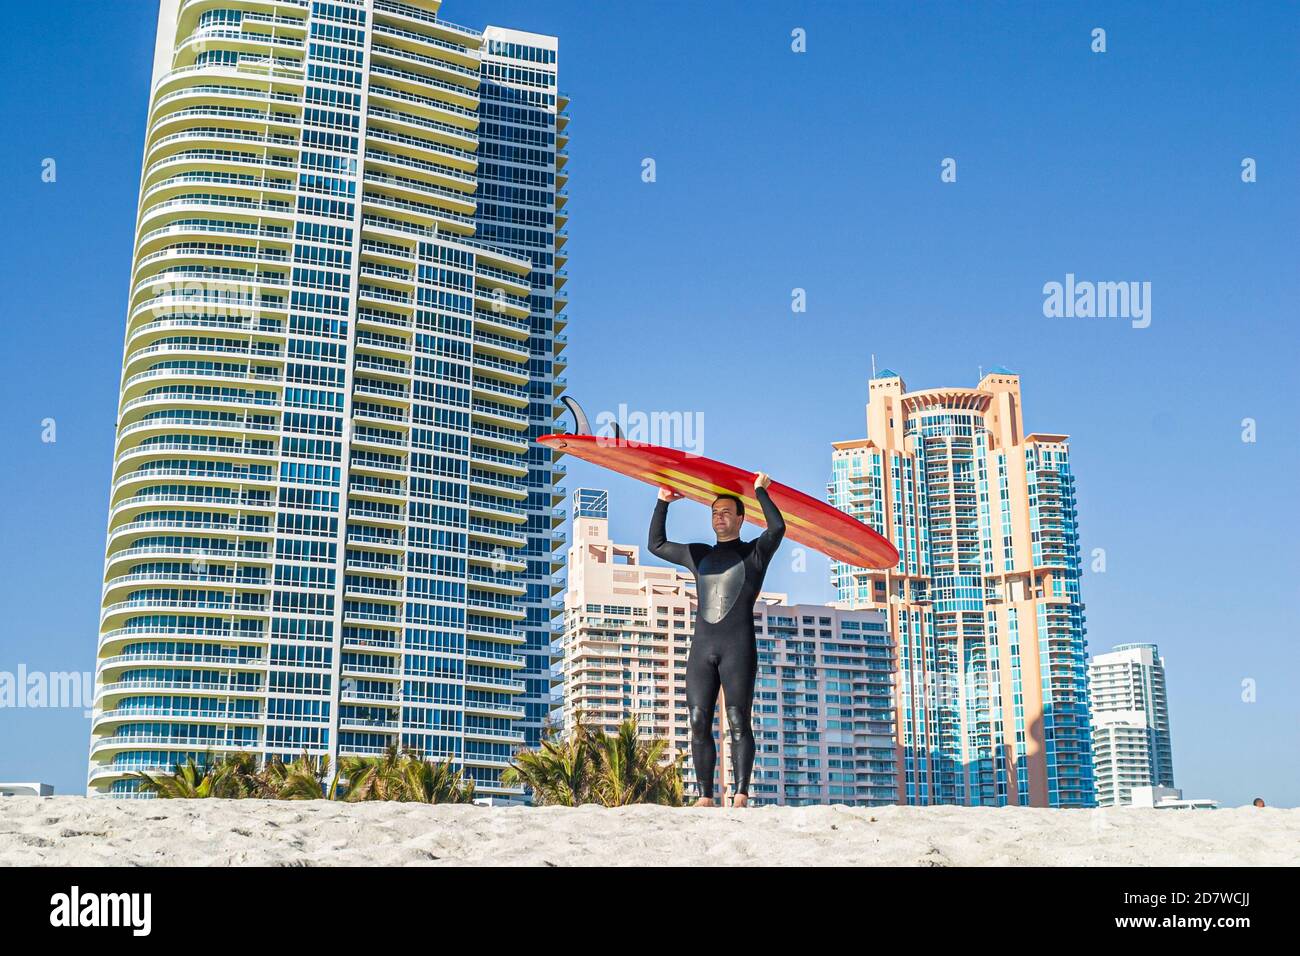 Miami Beach Florida,Atlantic Ocean seashore,lifeguard station surfer man surfboard balancing head,high rise building buildings condominiums,residences Stock Photo